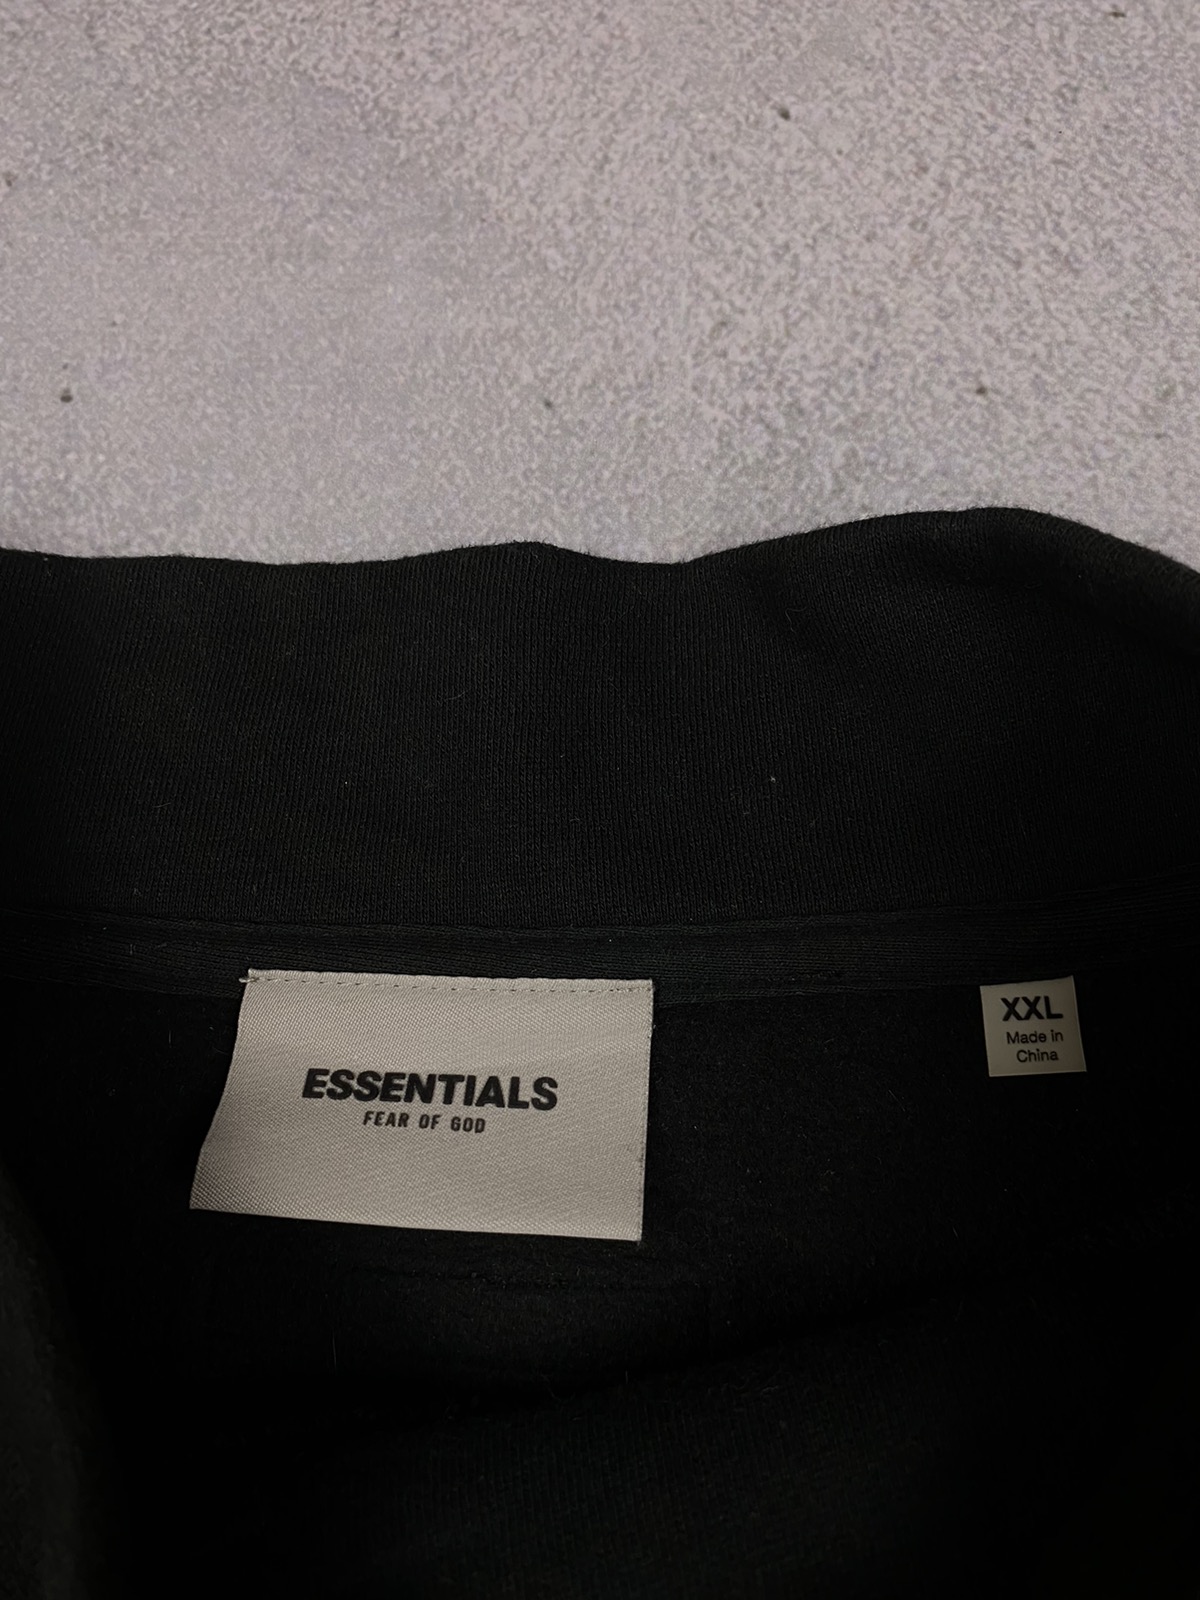 Fear of God Essentials sweatshirt logo reflective mock neck - 9